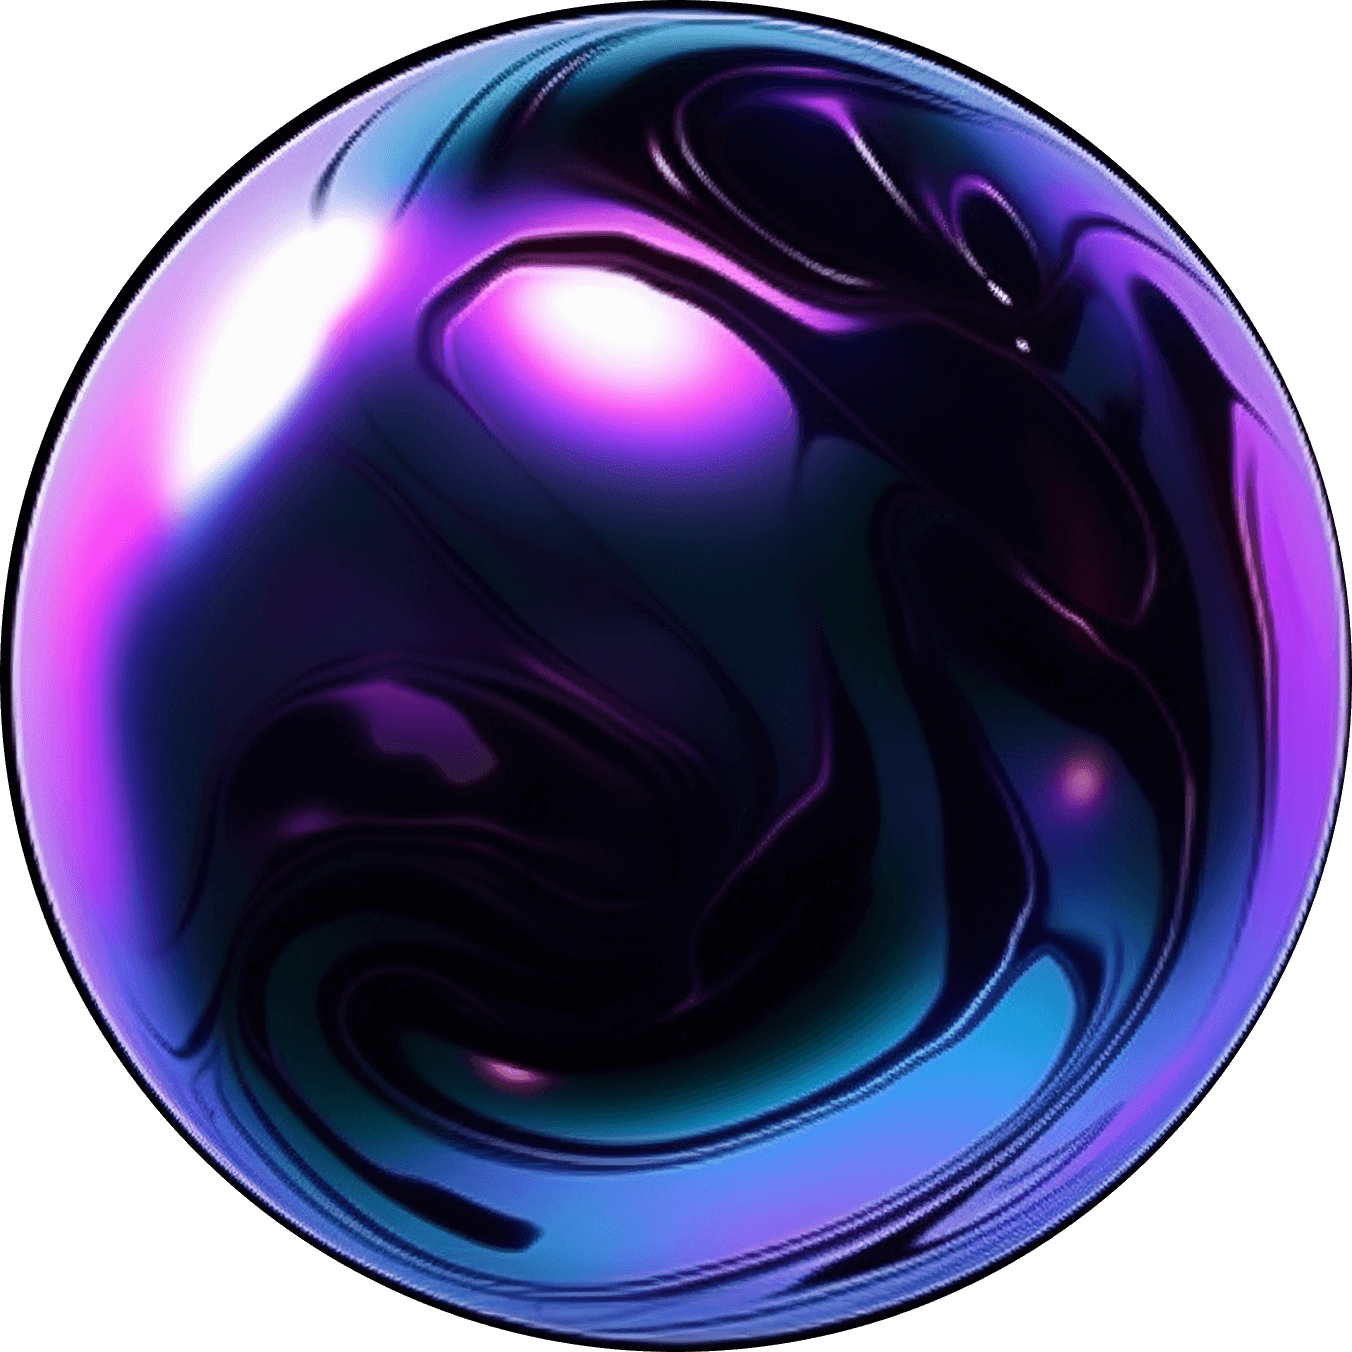 Circular swirl